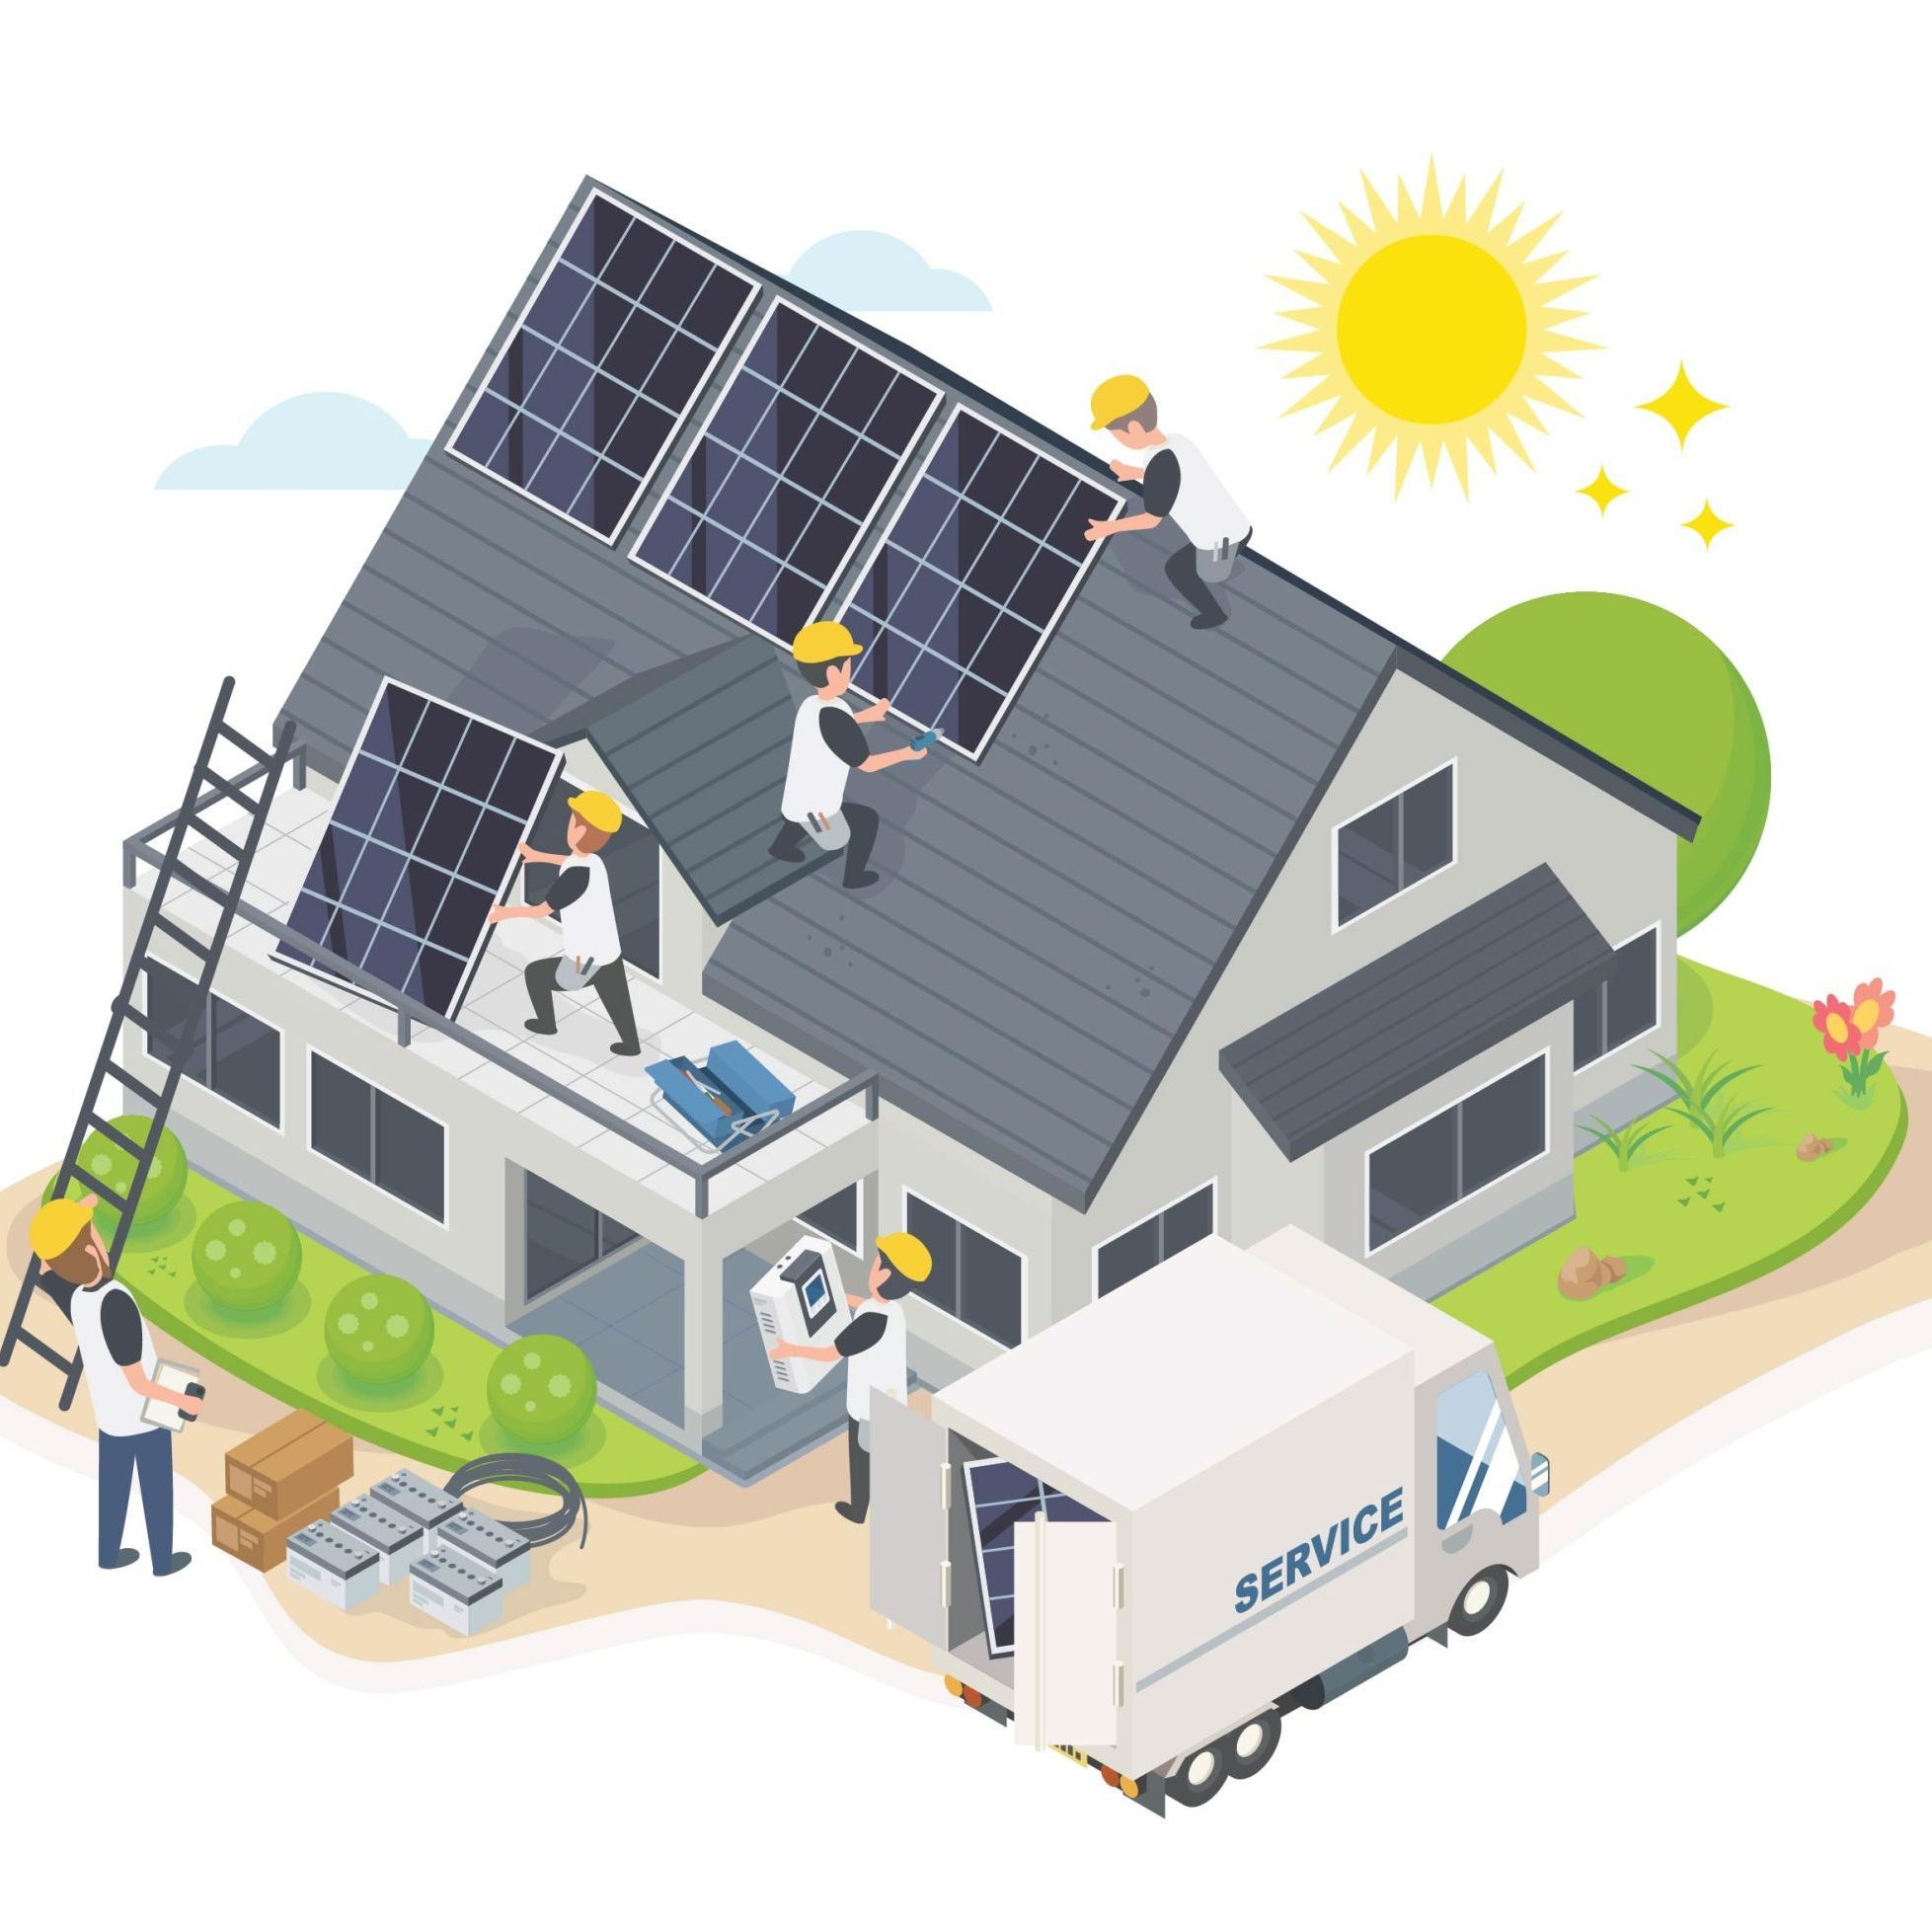 A cartoon image of solar power technicians installing a solar panel system